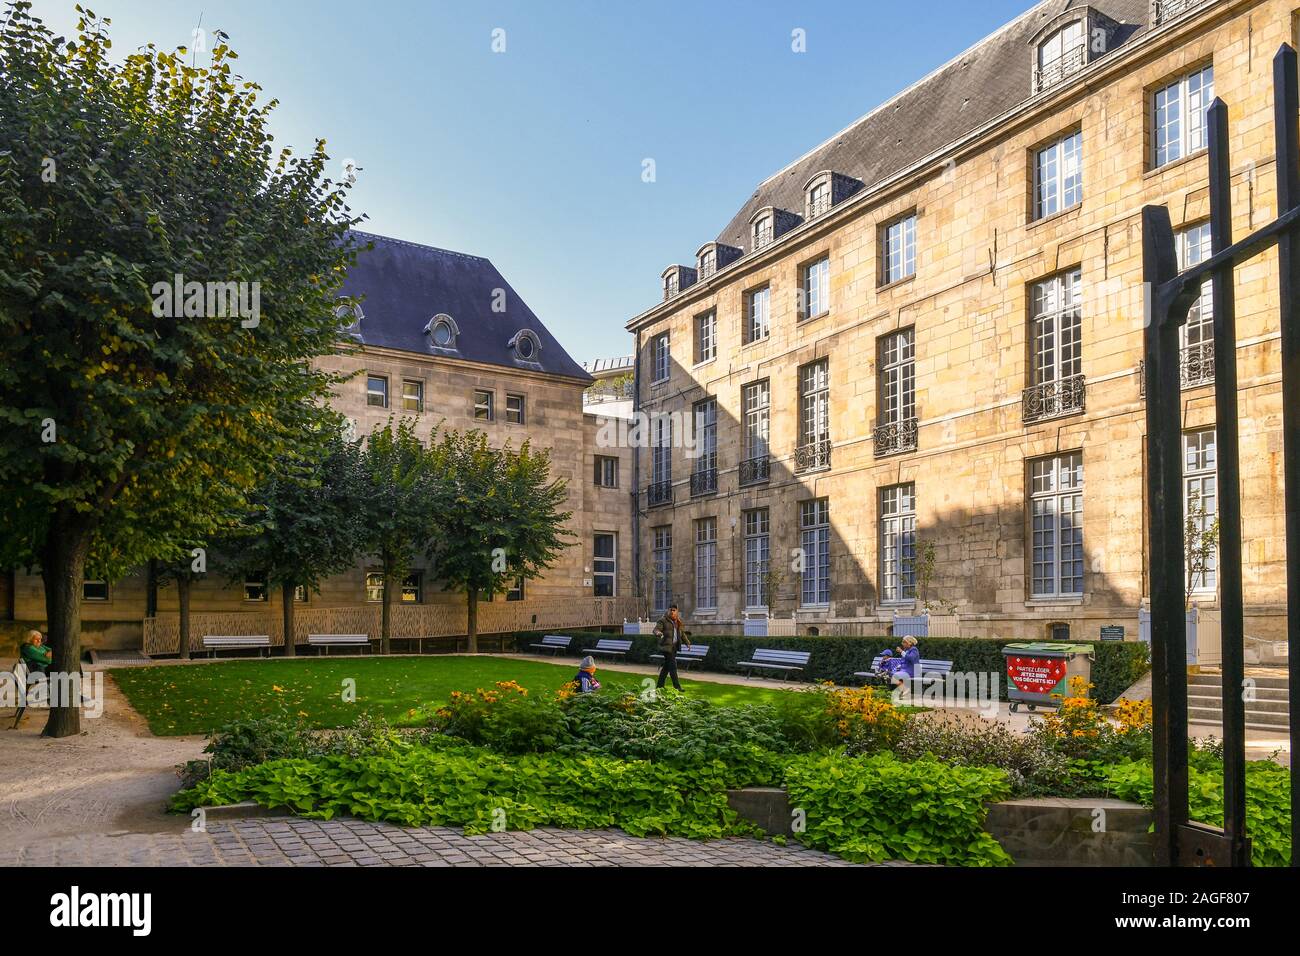 Public garden of the Hotel d'Angouleme Lamoignon, seat of the Bibliotheque Historique, in the Marais district (4th arrondissement), Paris, France Stock Photo